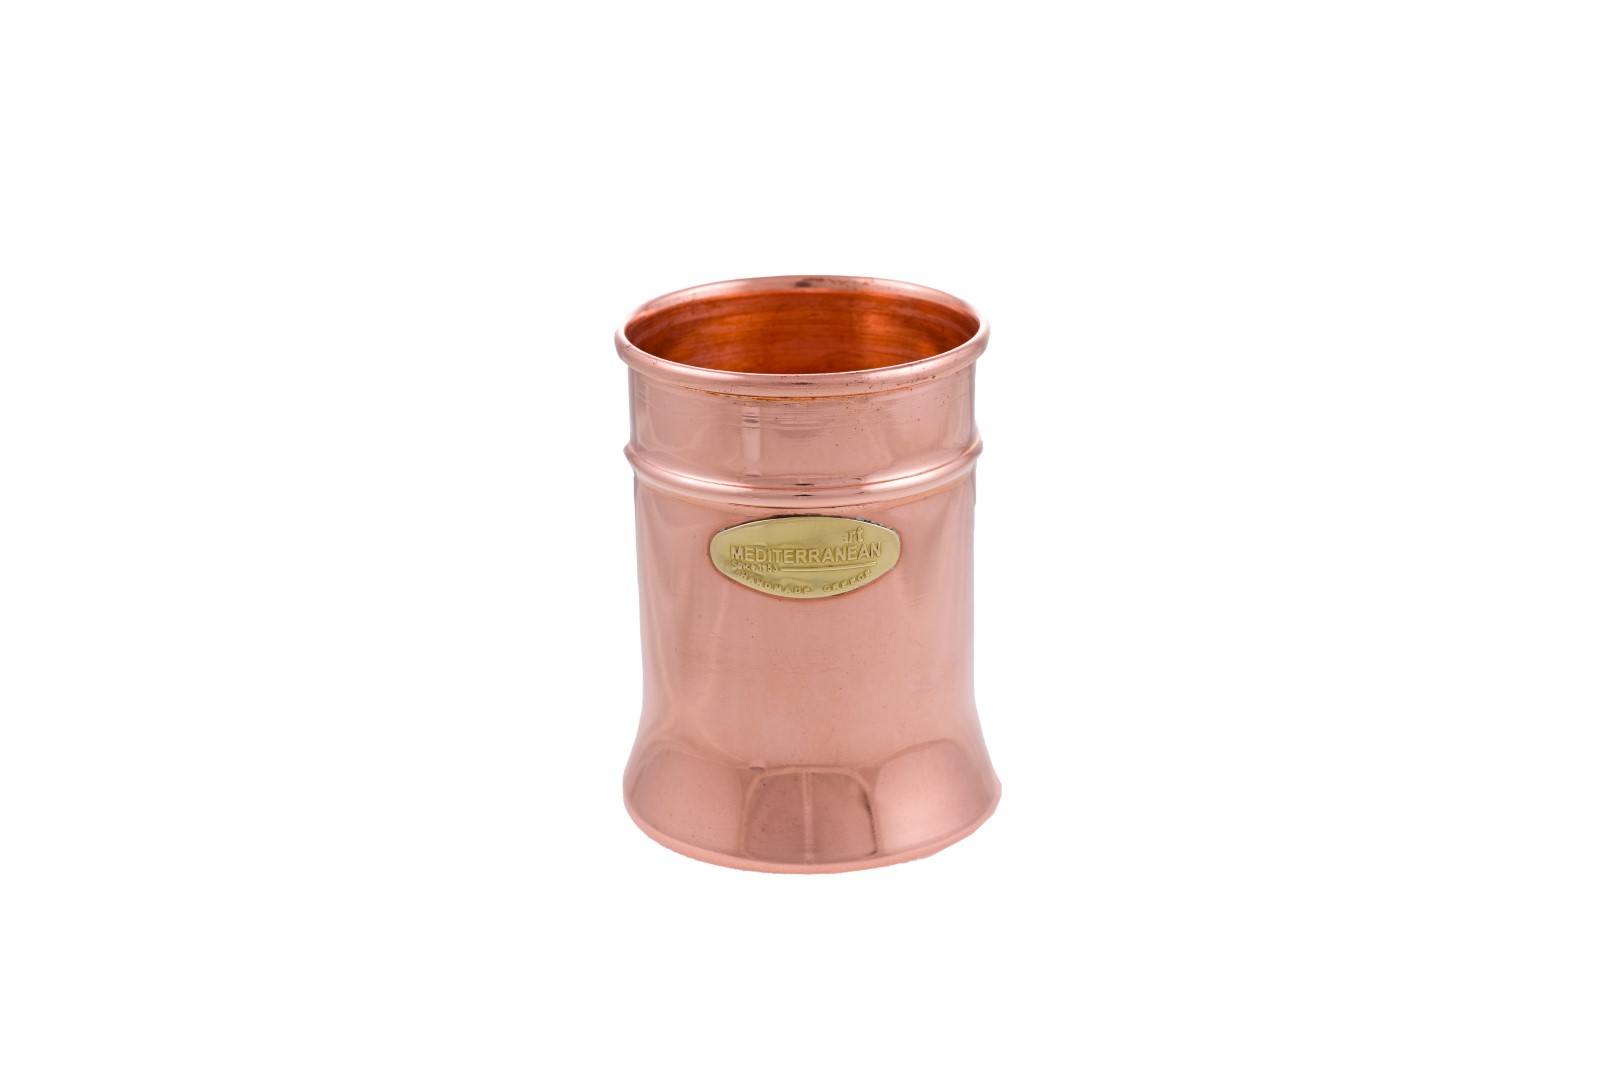 Copper Items - Copper King Glass